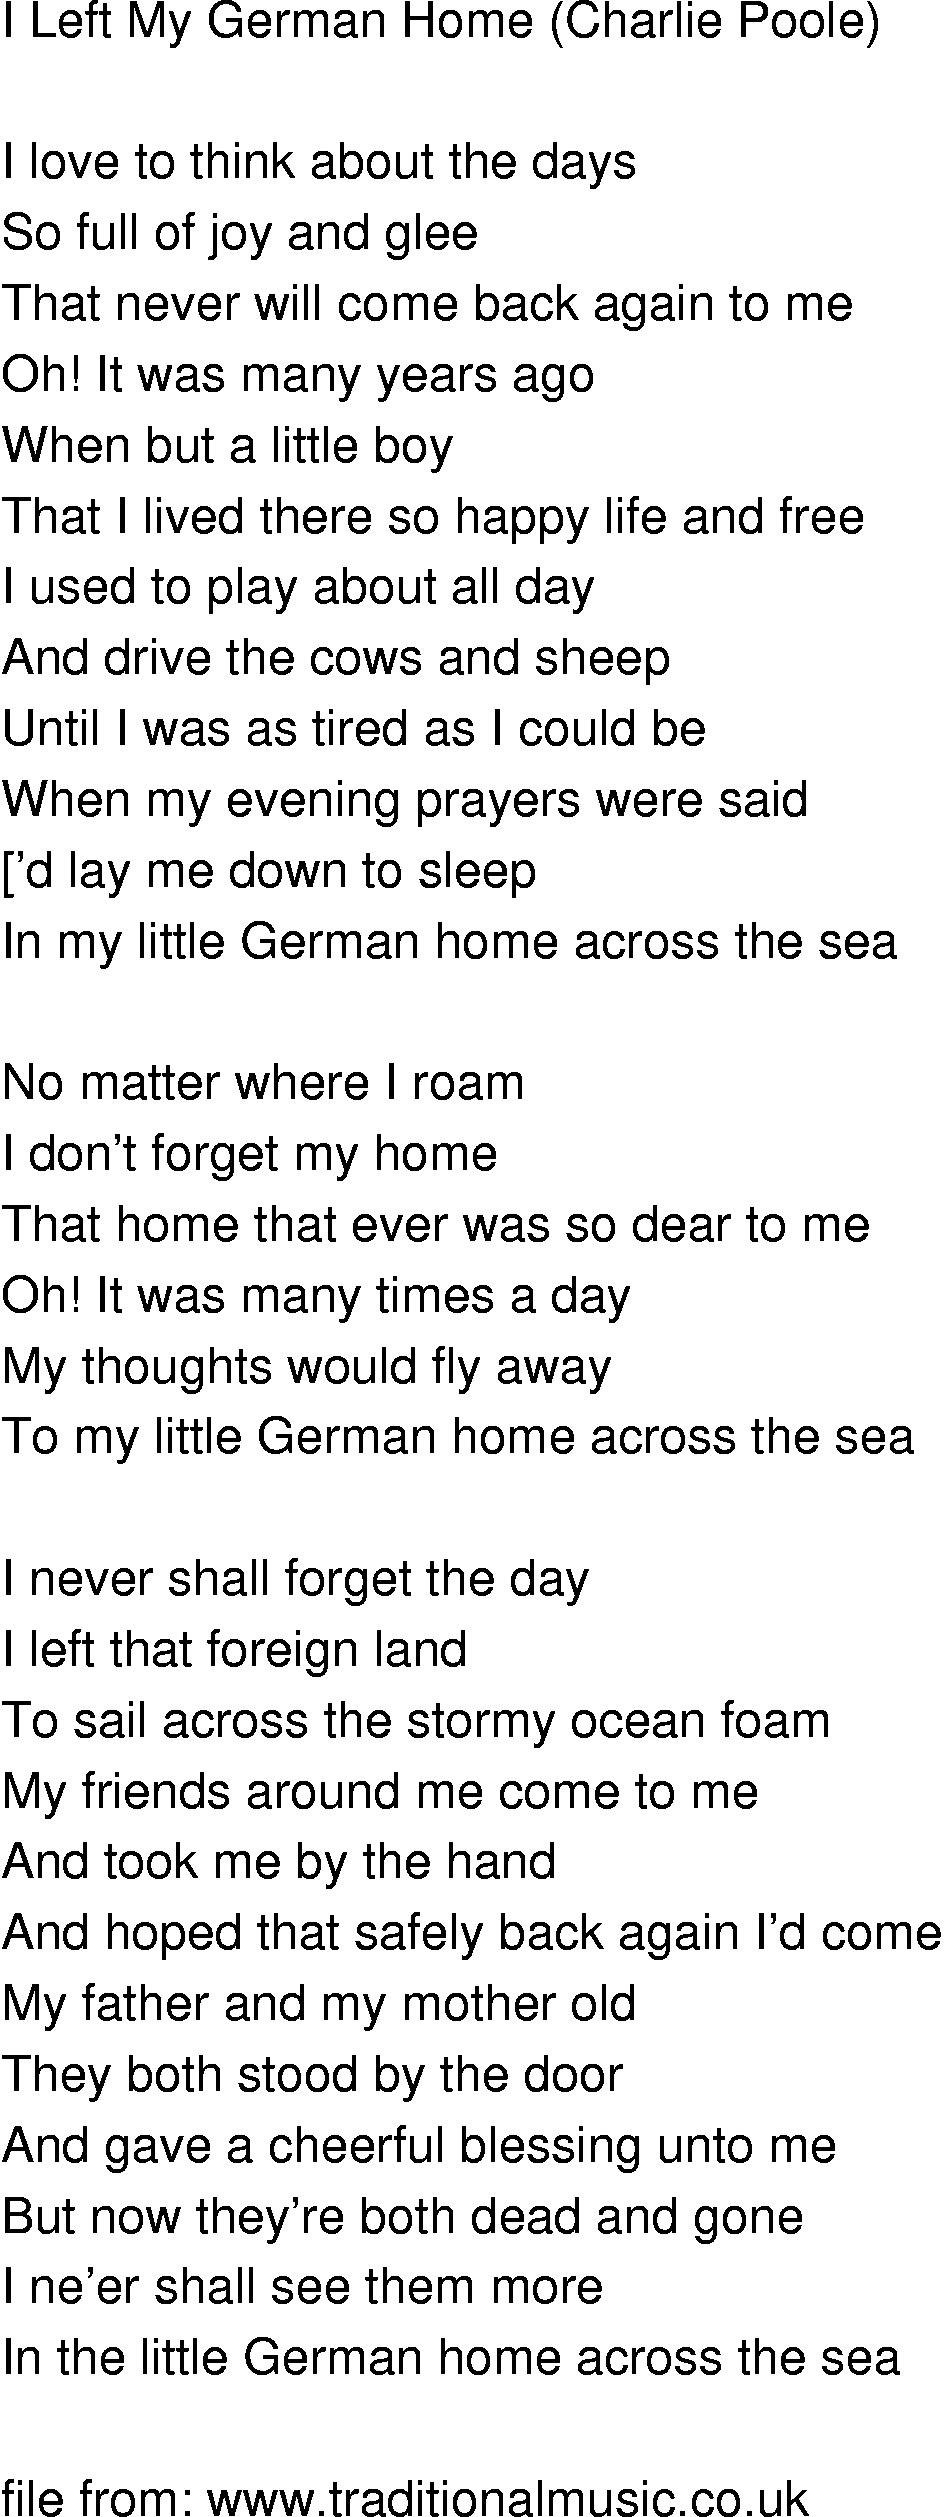 Old-Time (oldtimey) Song Lyrics - i left my german home